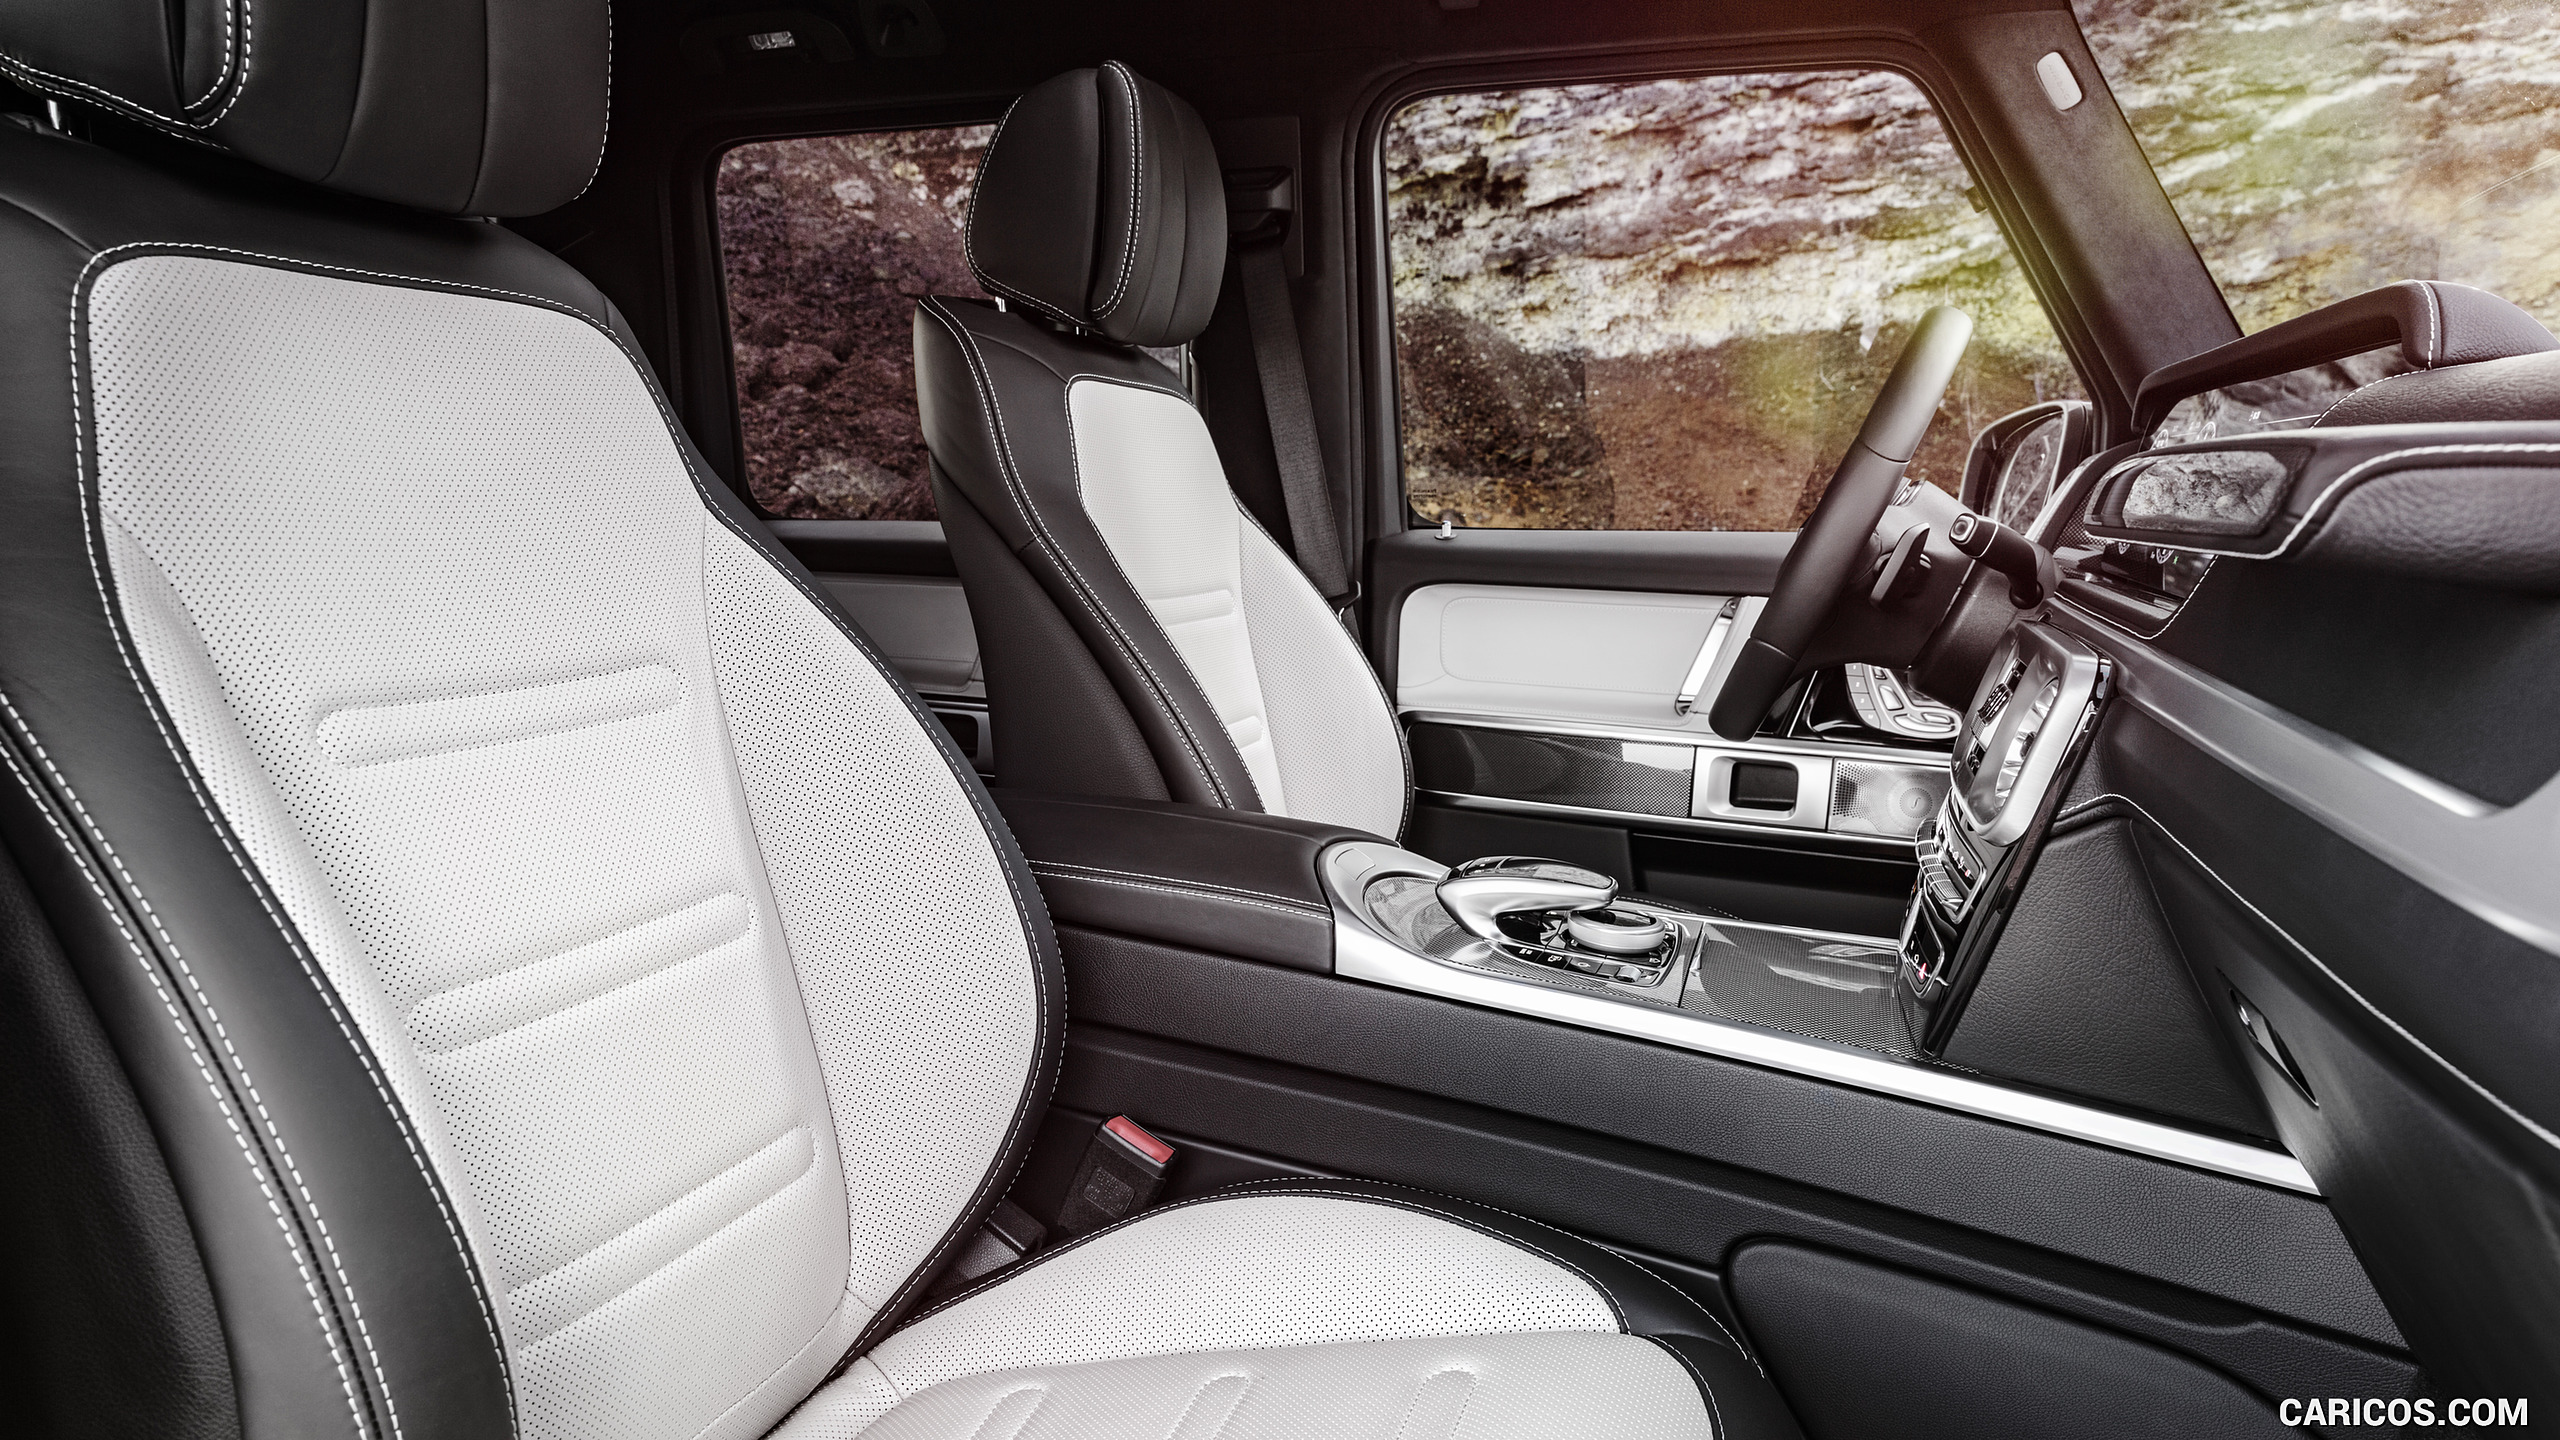 2019 Mercedes-Benz G-Class G550 - Interior, Front Seats, #42 of 397